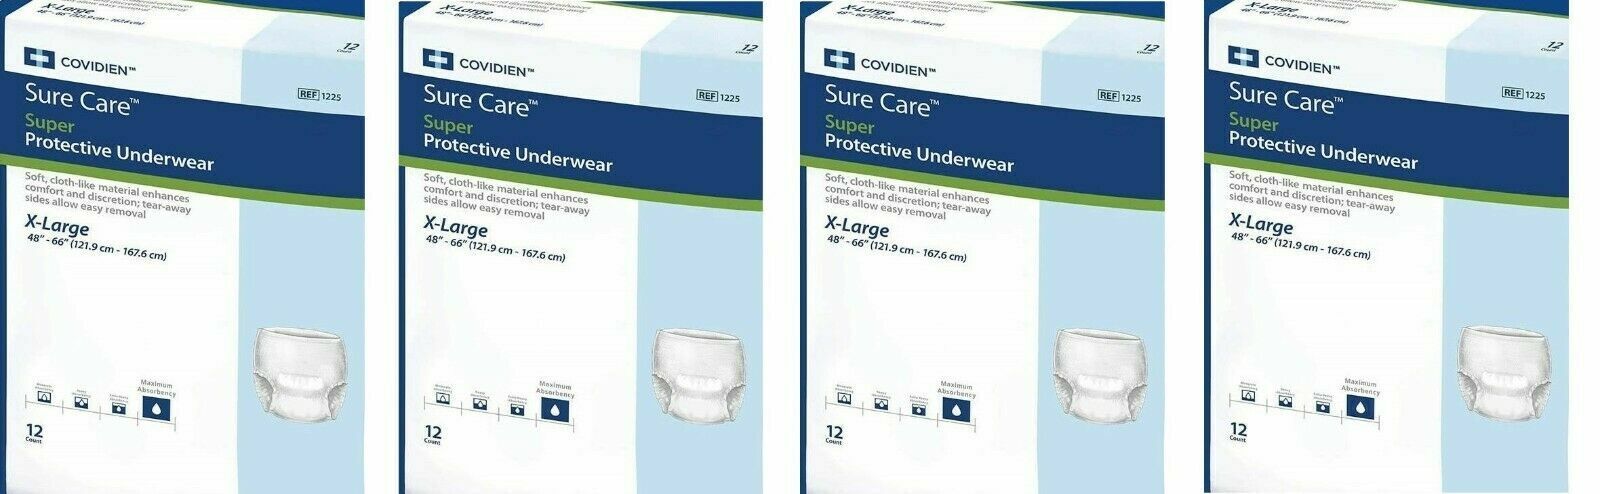 SureCare Protective Underwear EXTRA-HEAVY Absorbency Size XL 12 Each Lot of 4  SureCare 1225